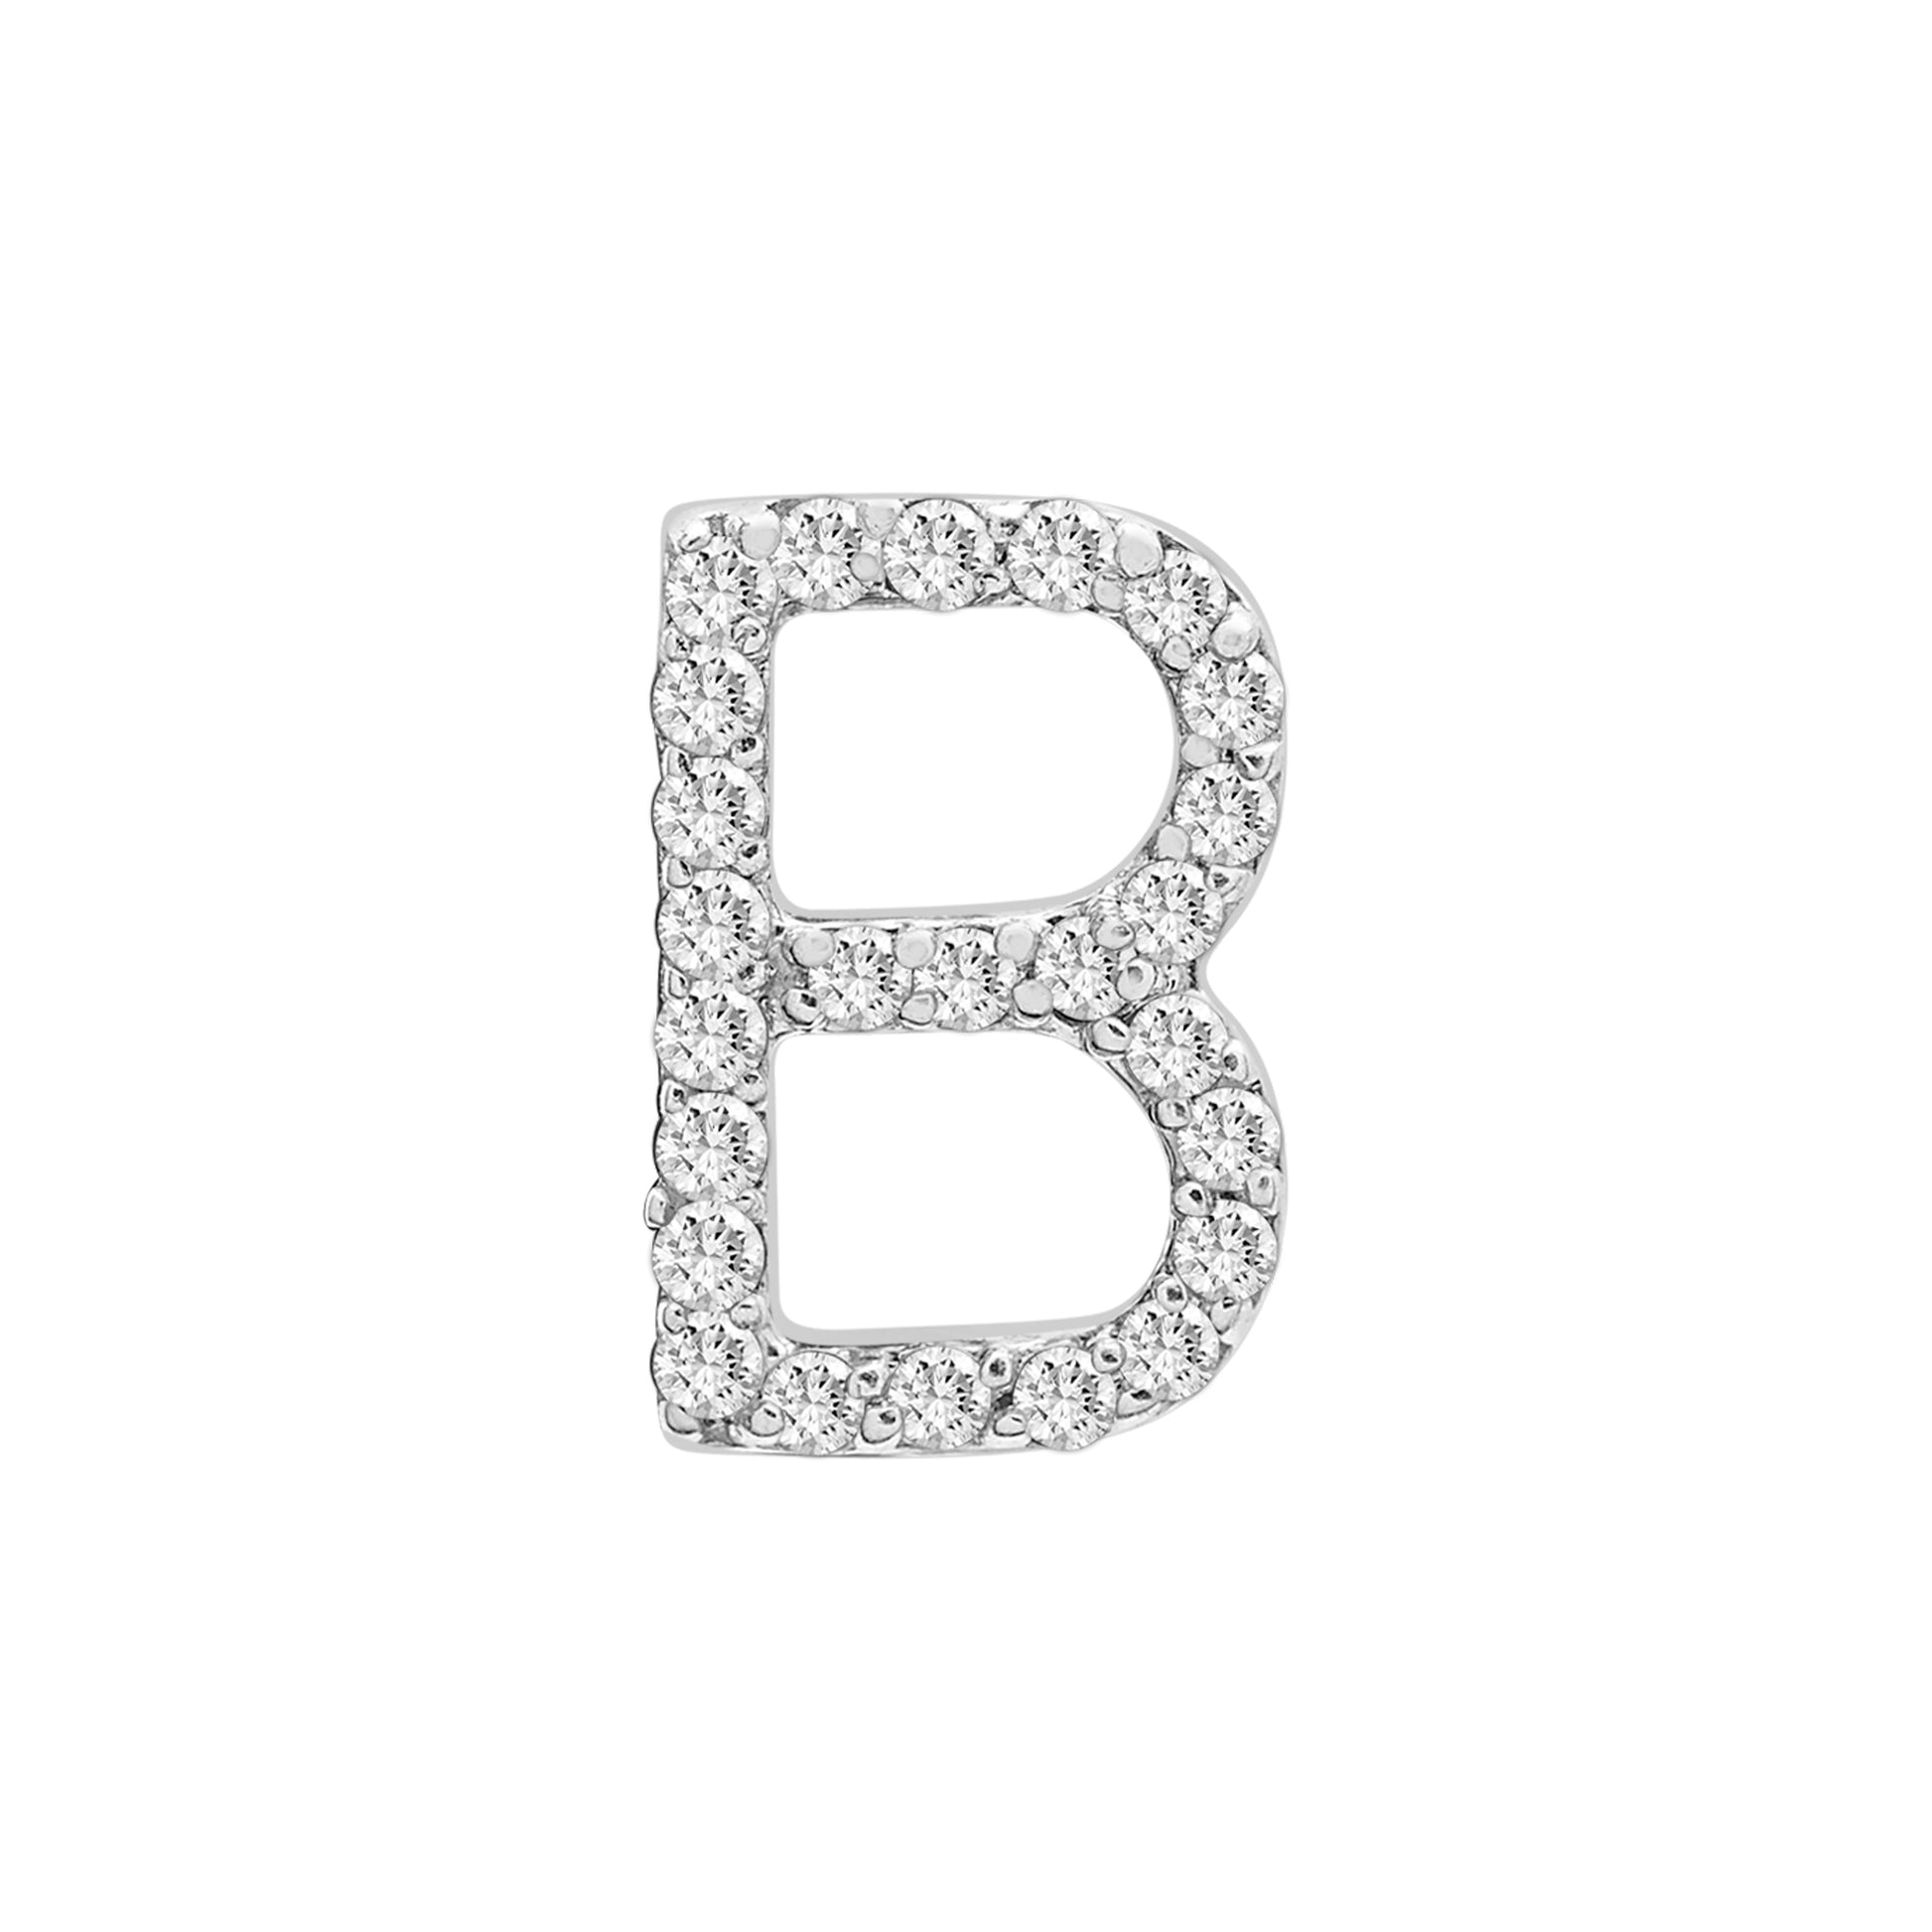 Single Initial Diamond Stud - B in White Gold